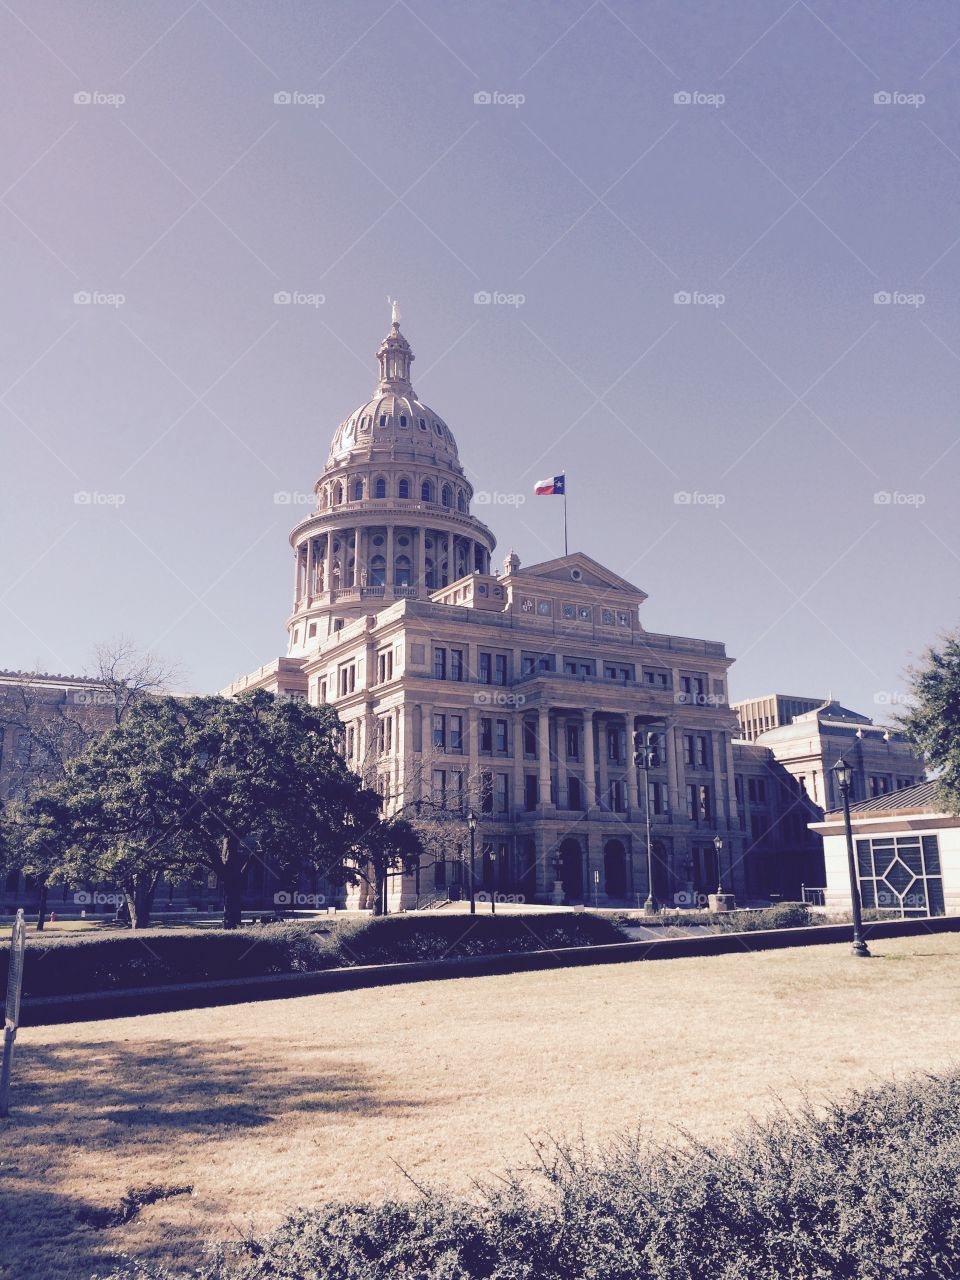 Texas Capital Building in Austin